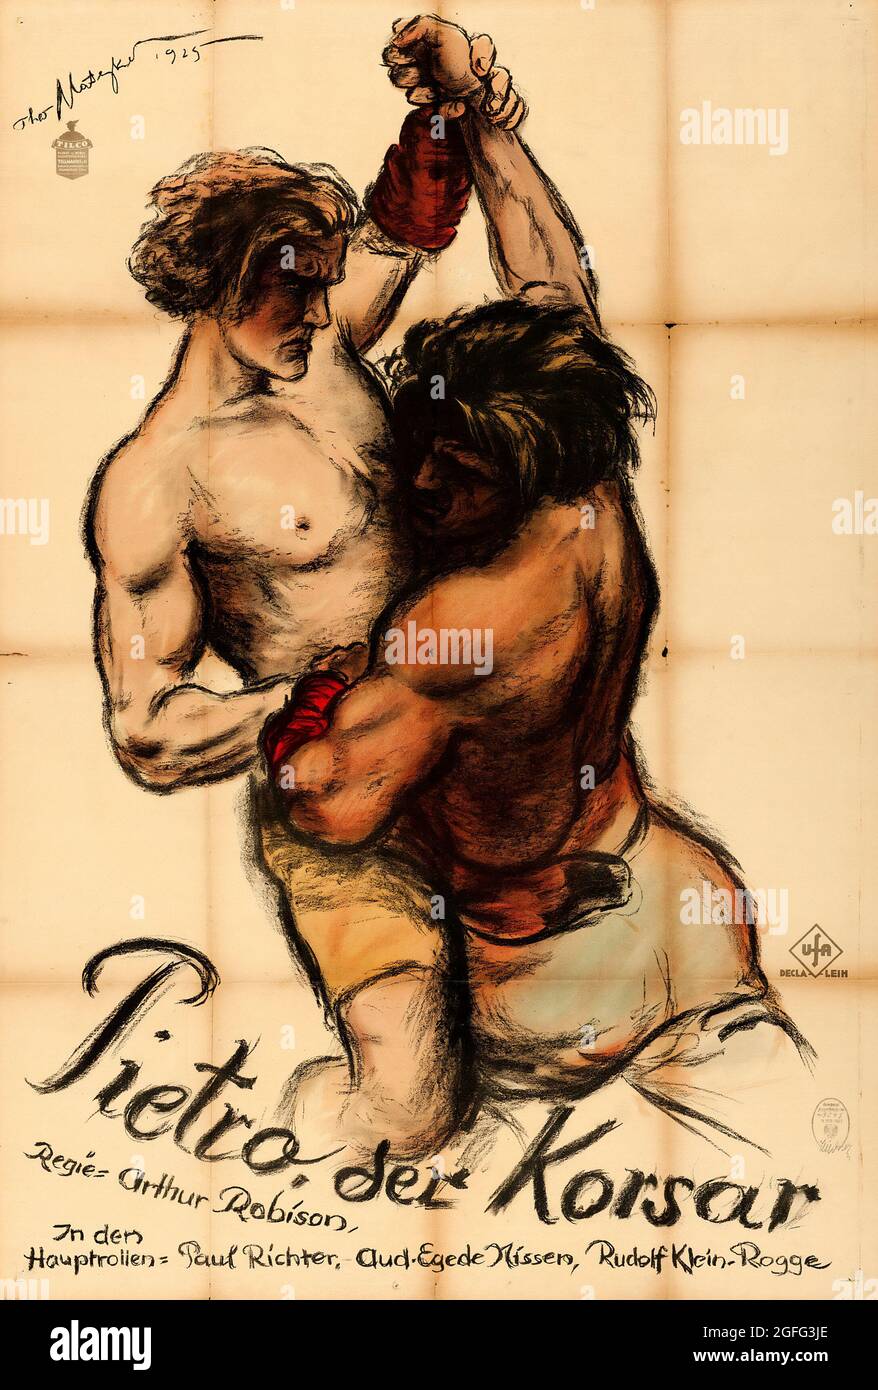 Pietro der Korsar – le Pirate d'amour (UFA, 1925). Poster de film allemand. Theo Matejko Artwork. Banque D'Images